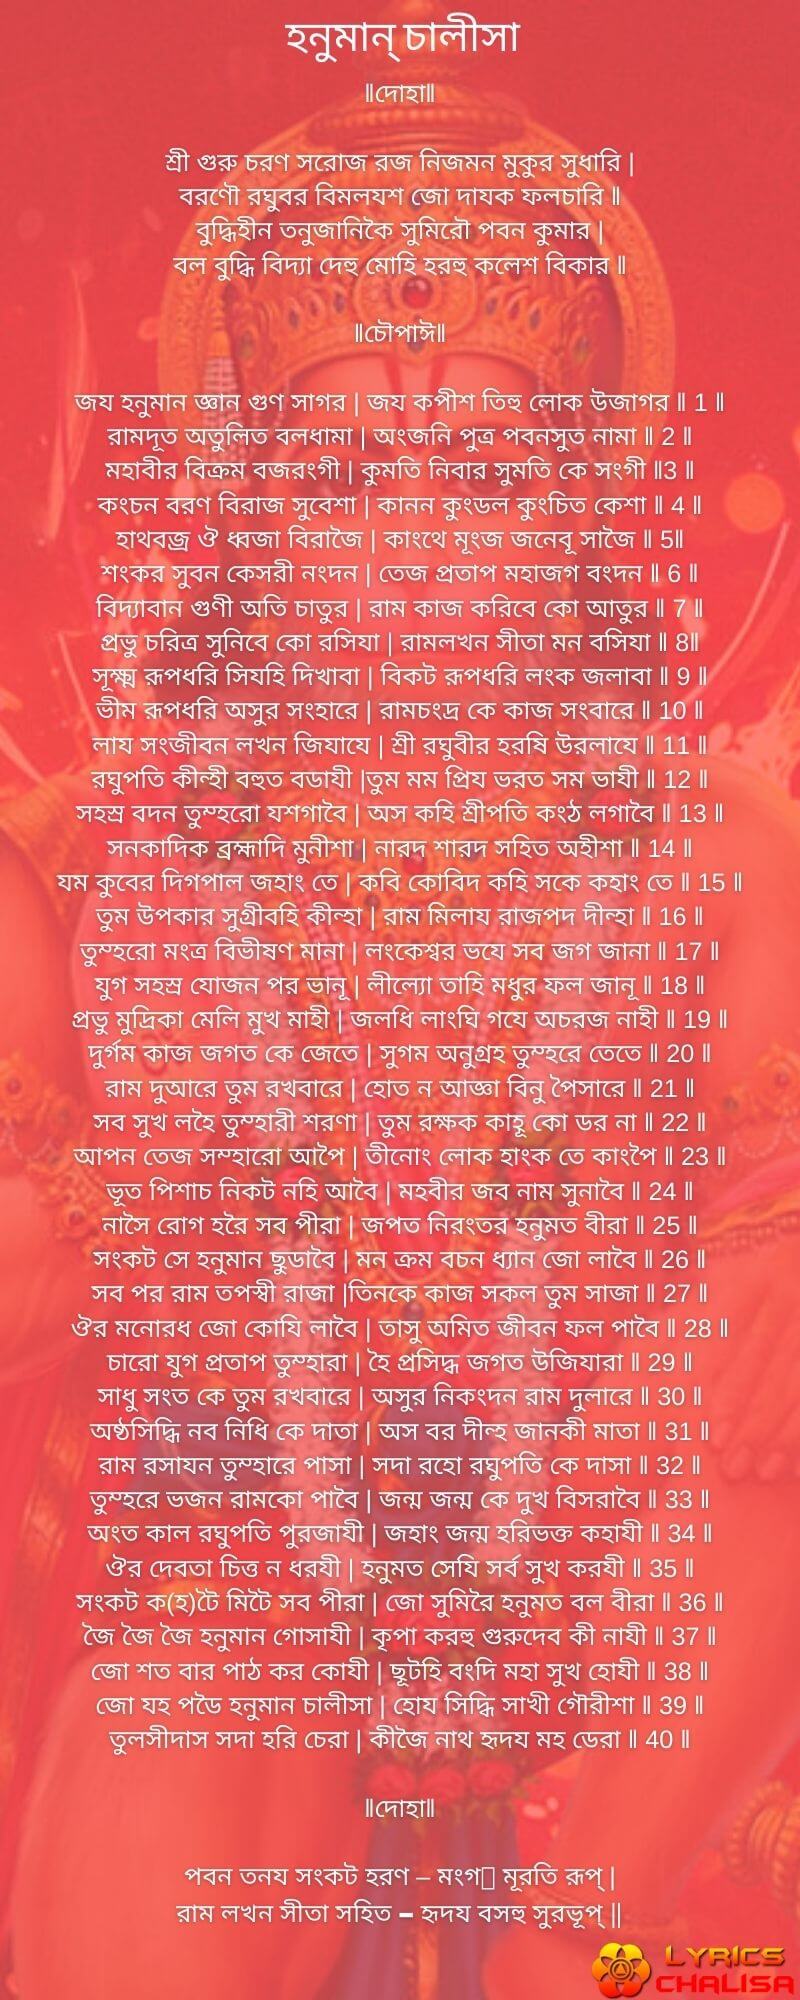 Shree Hanuman Chalisa Lyrics In bengali With PDF